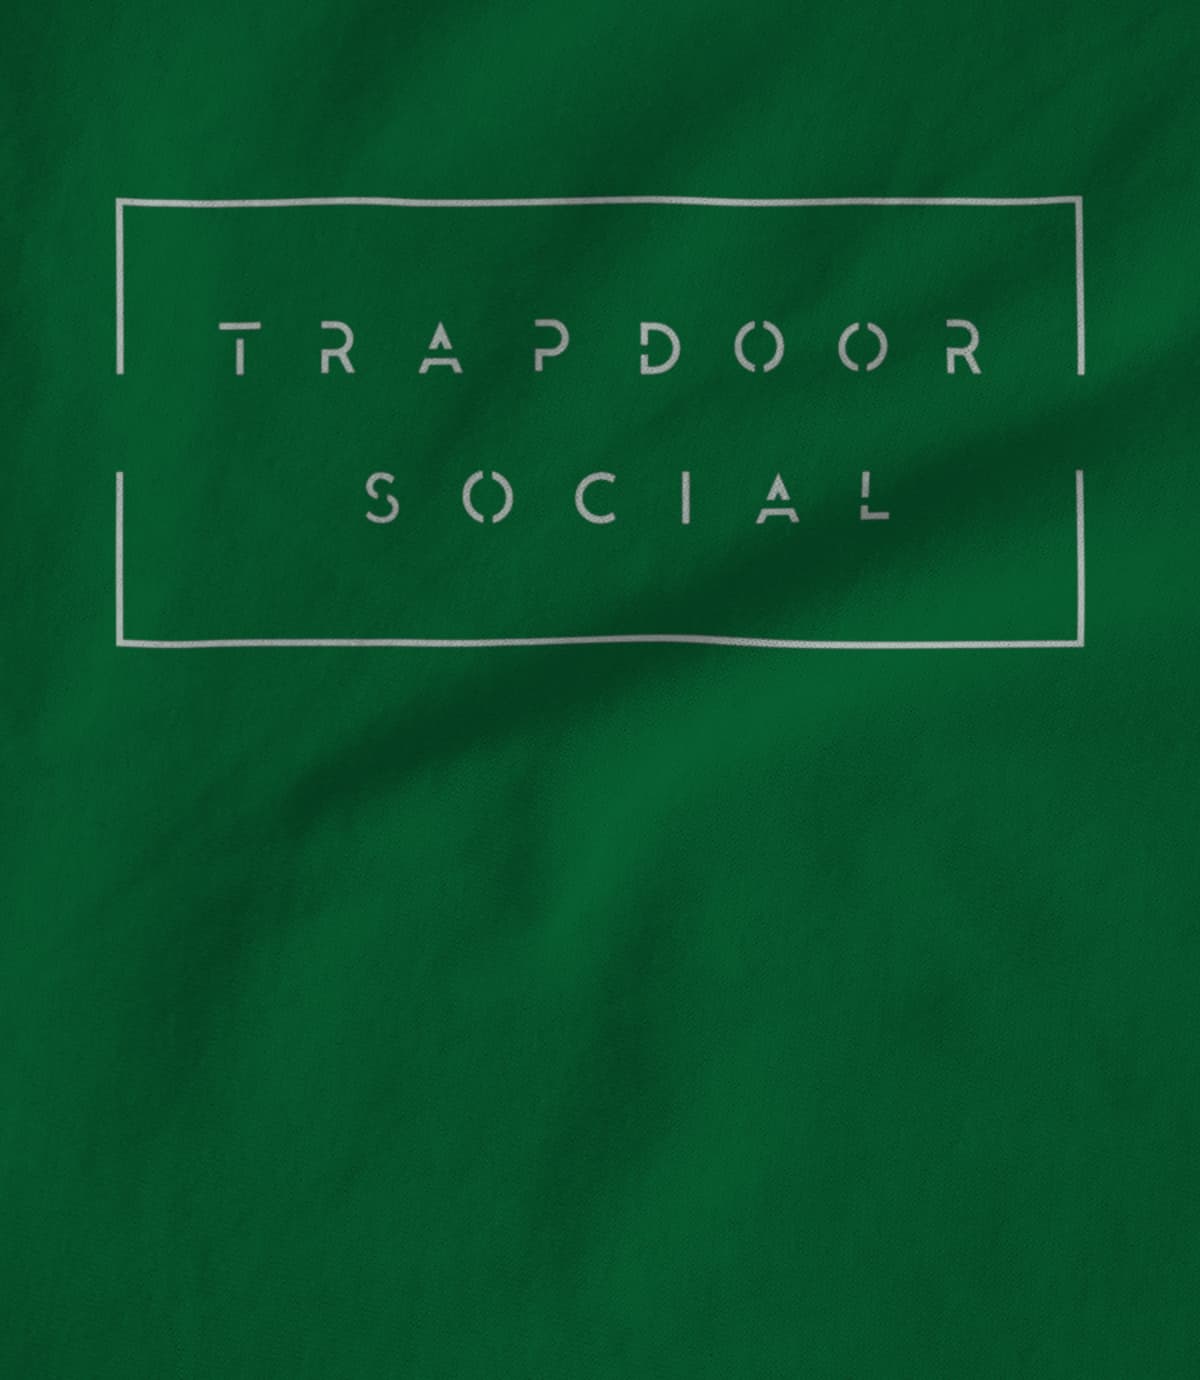 Trapdoor social black band logo 1476401243